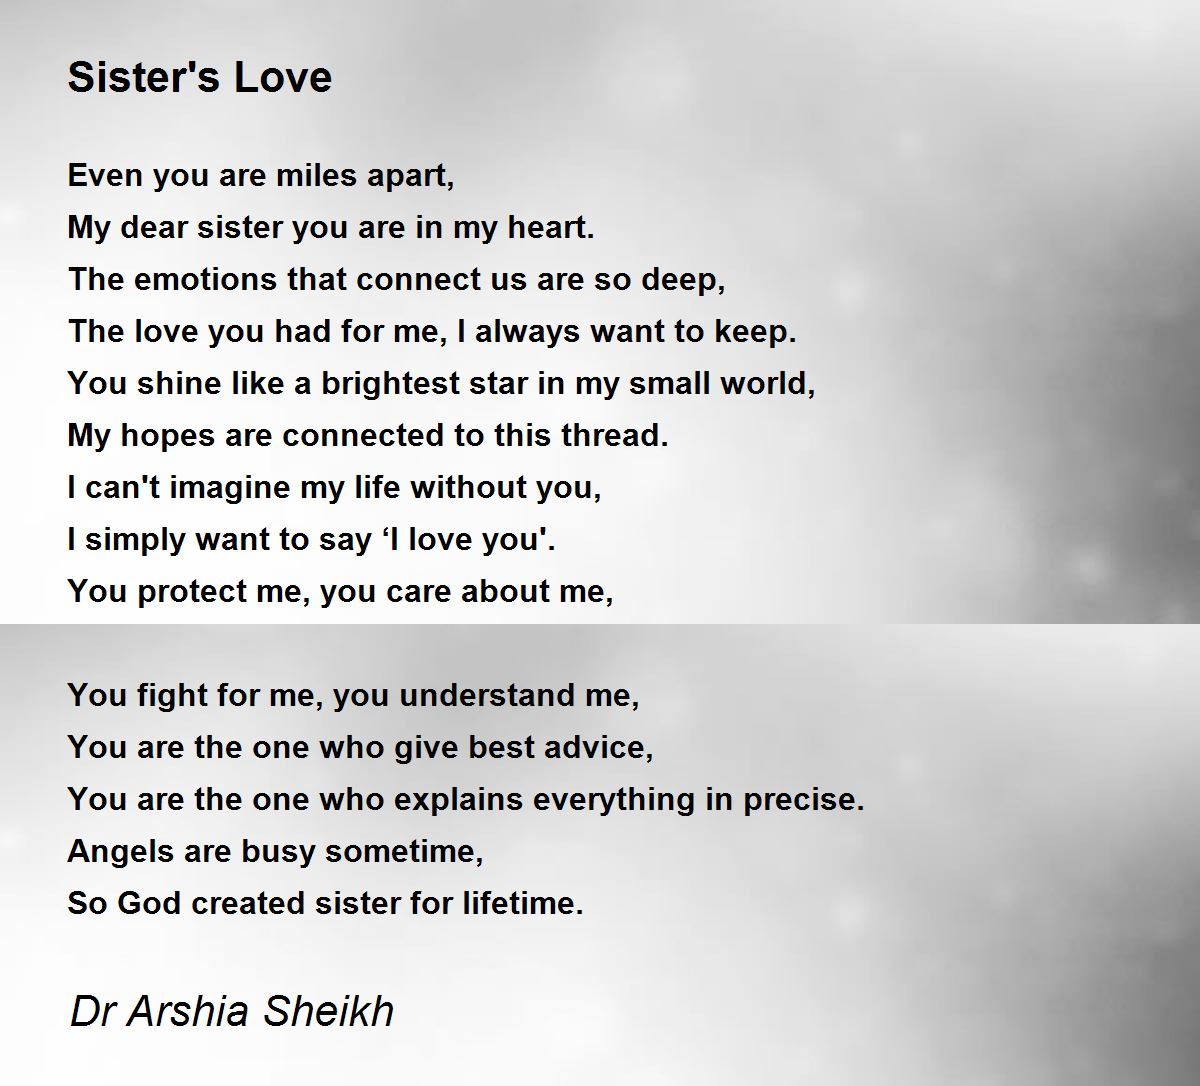 Sister's Love - Sister's Love Poem by Dr Arshia Sheikh